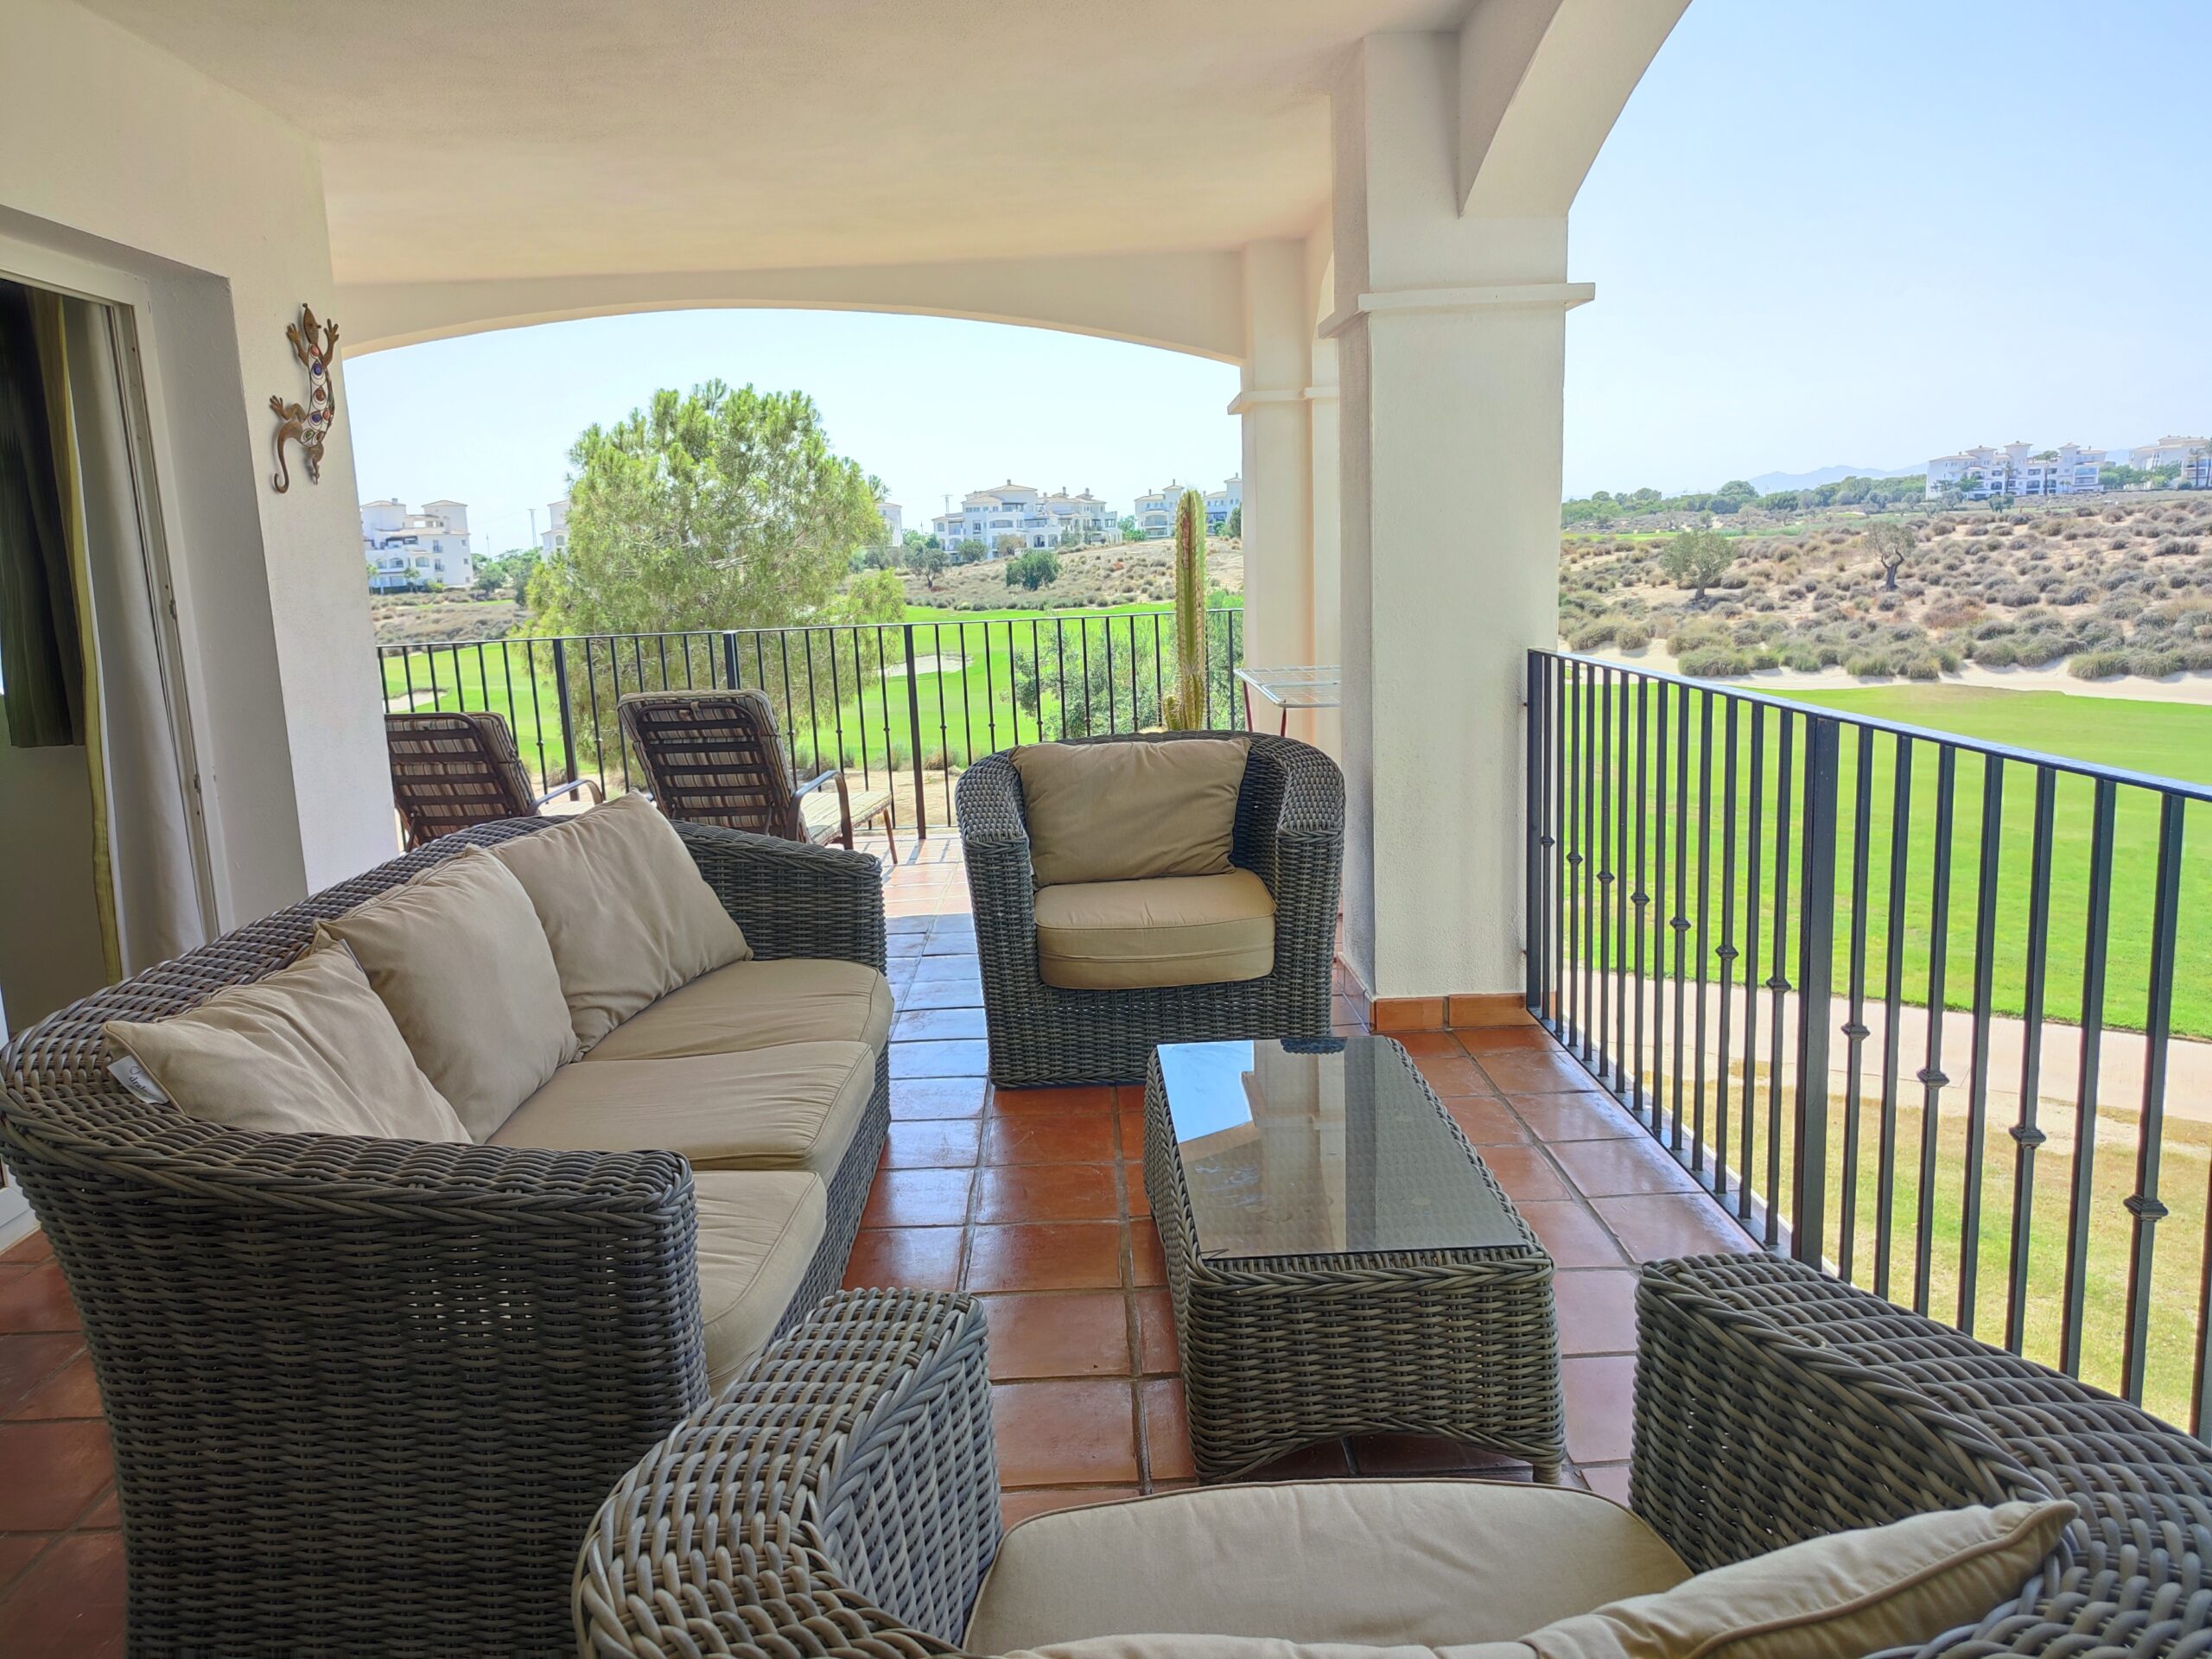 Stunning Views from L shaped Terrace, 1st Floor Apartment Hacienda Riquelme